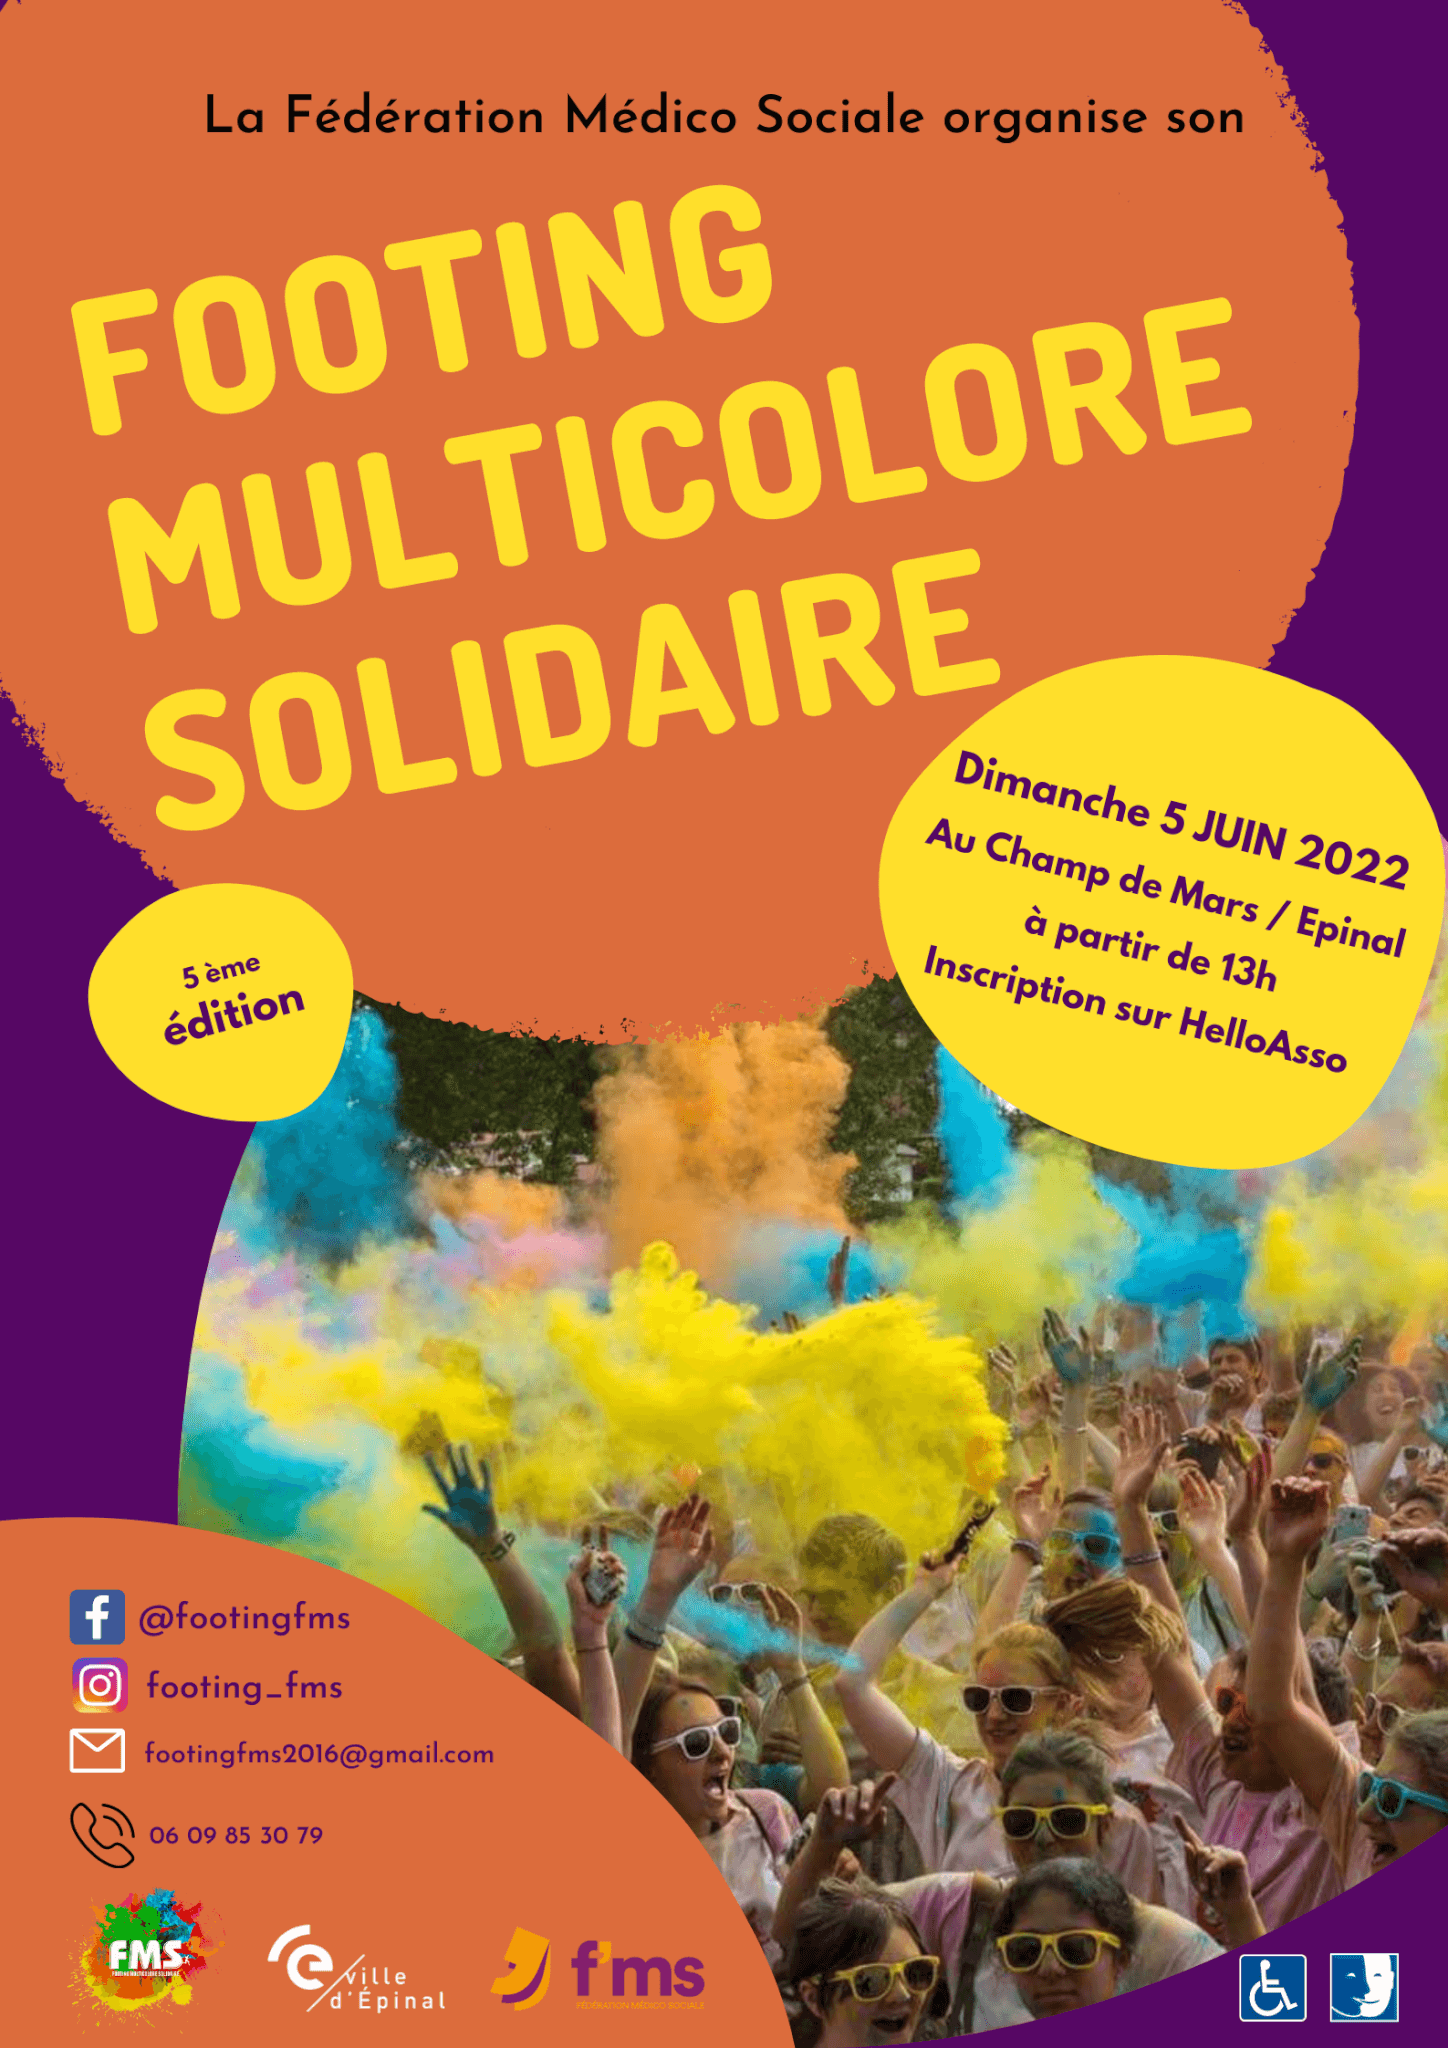 FMS footing multicolore solidaire 5 juin 2022